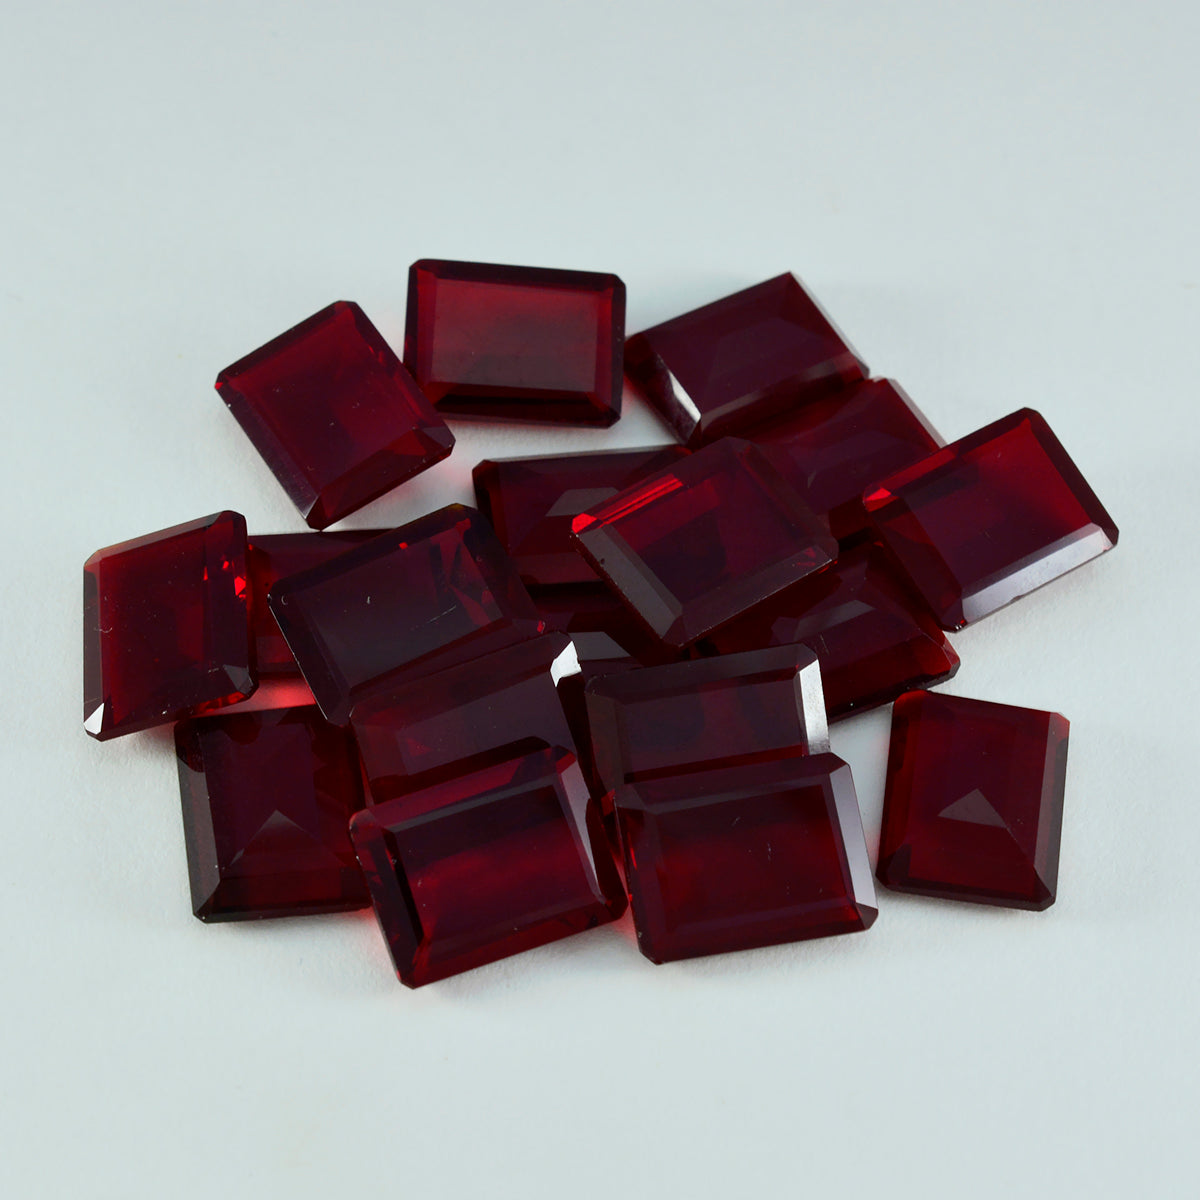 riyogems 1st röd rubin cz fasetterad 9x11 mm oktagon form häpnadsväckande kvalitet lös pärla